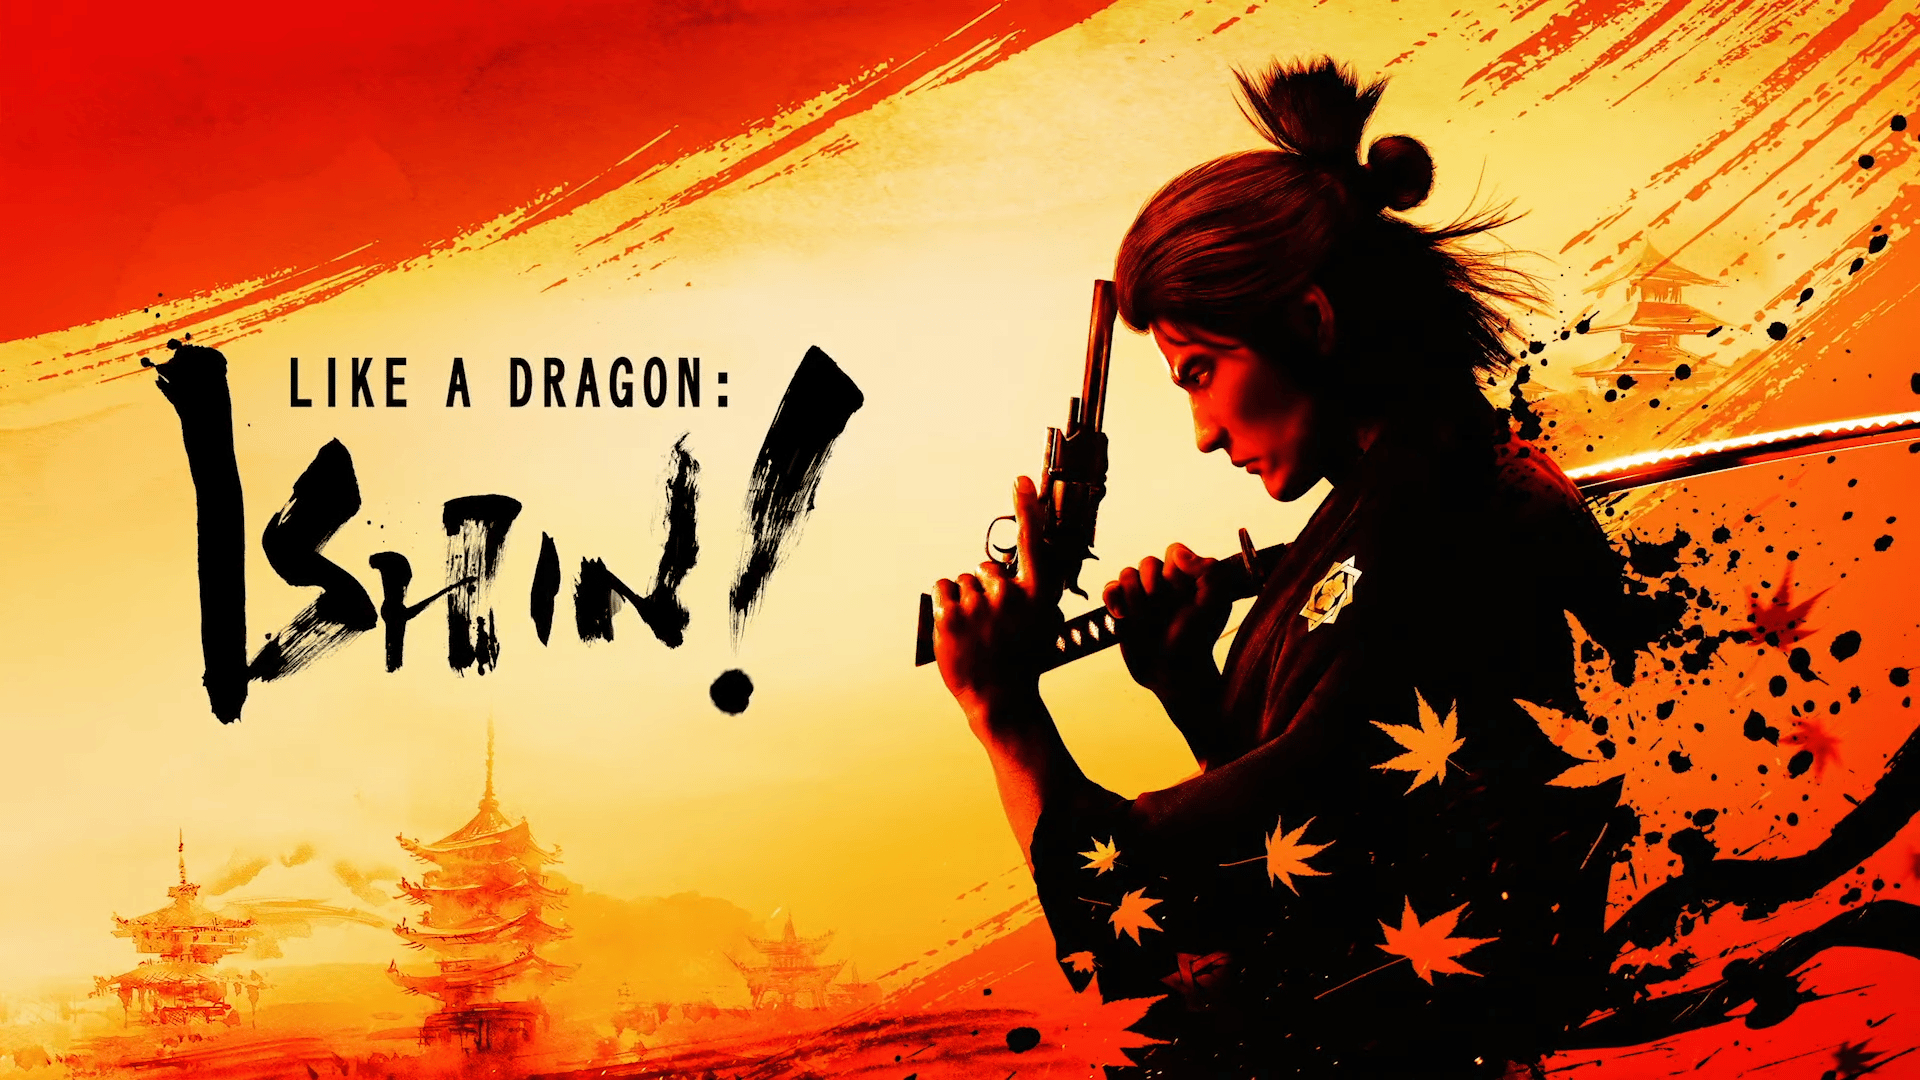 Релизный трейлер экшена Like a Dragon: Ishin!